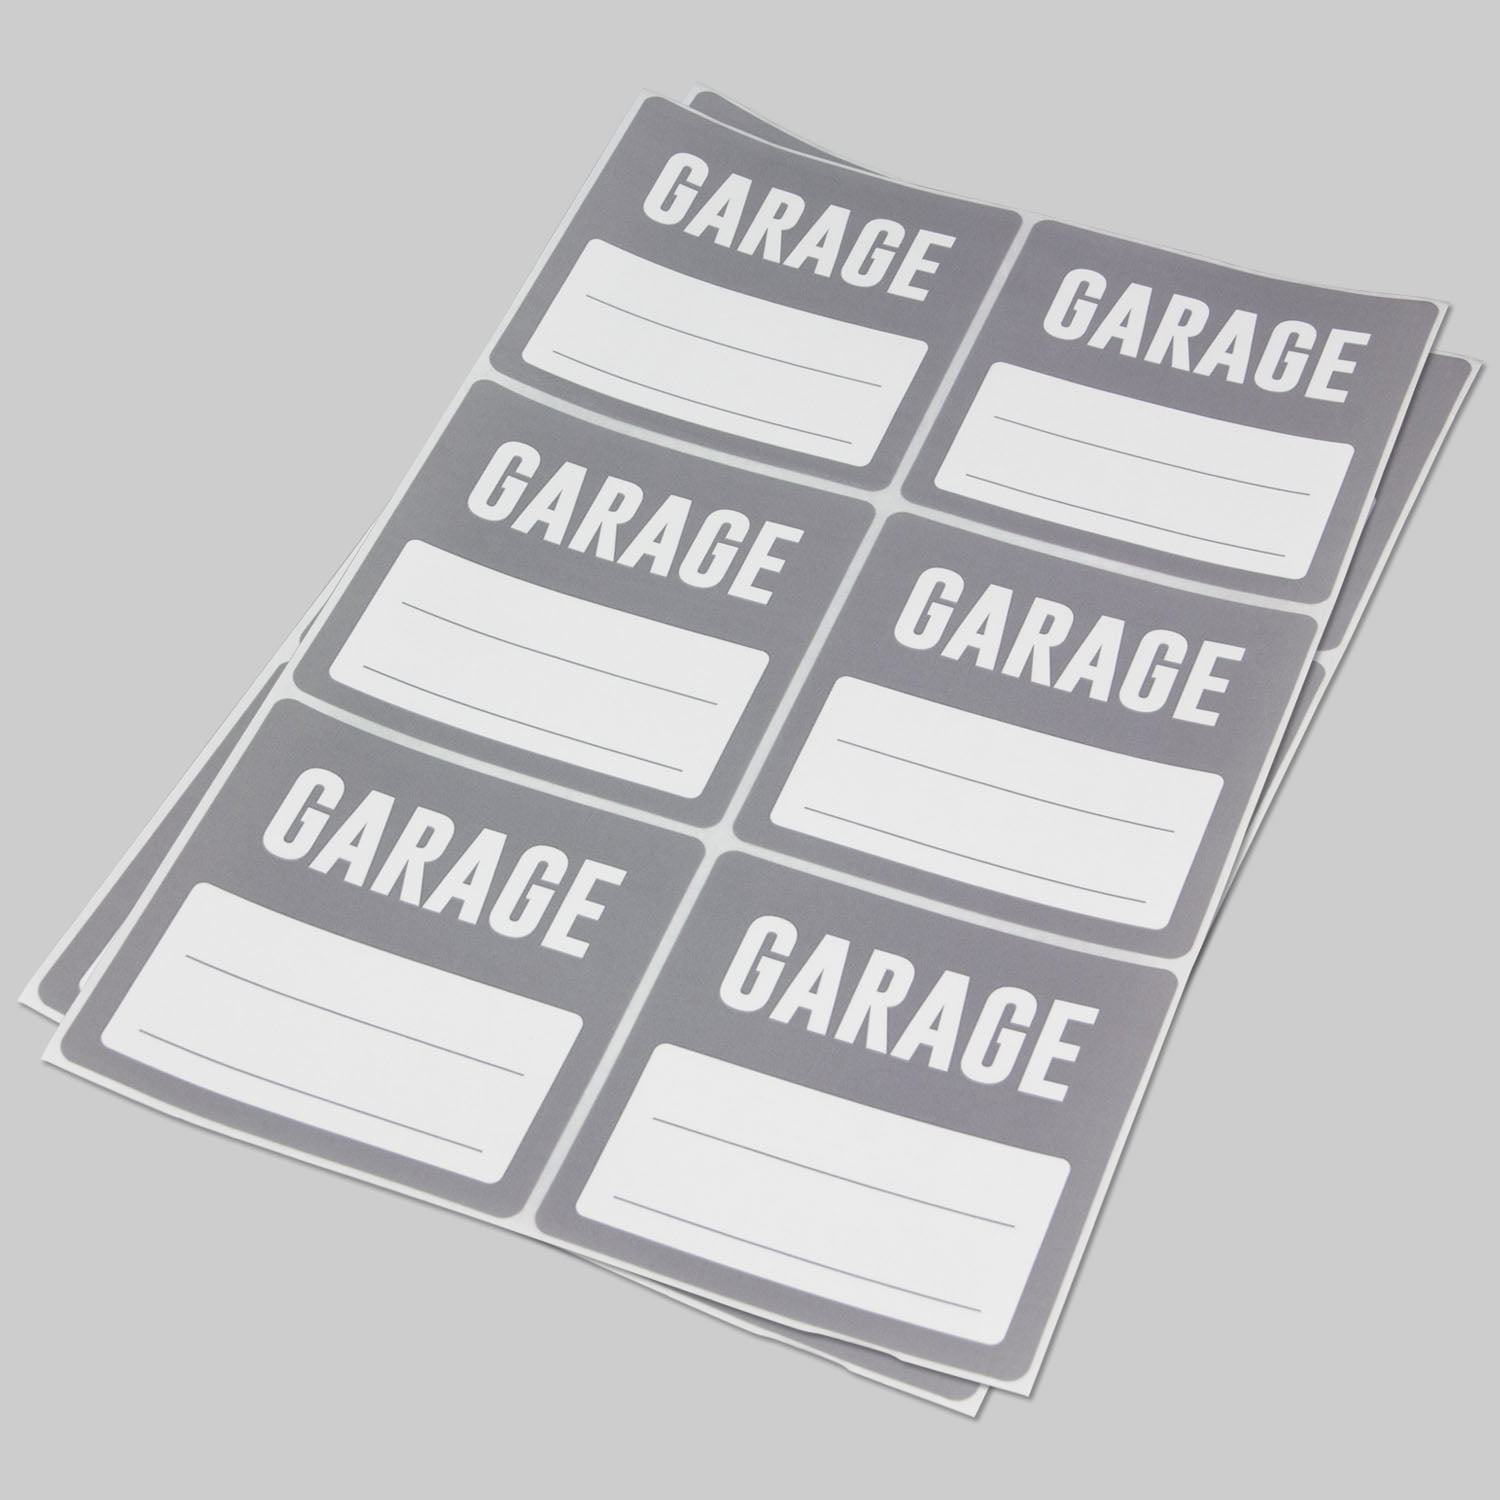 Garage Organization Labels | tunersread.com